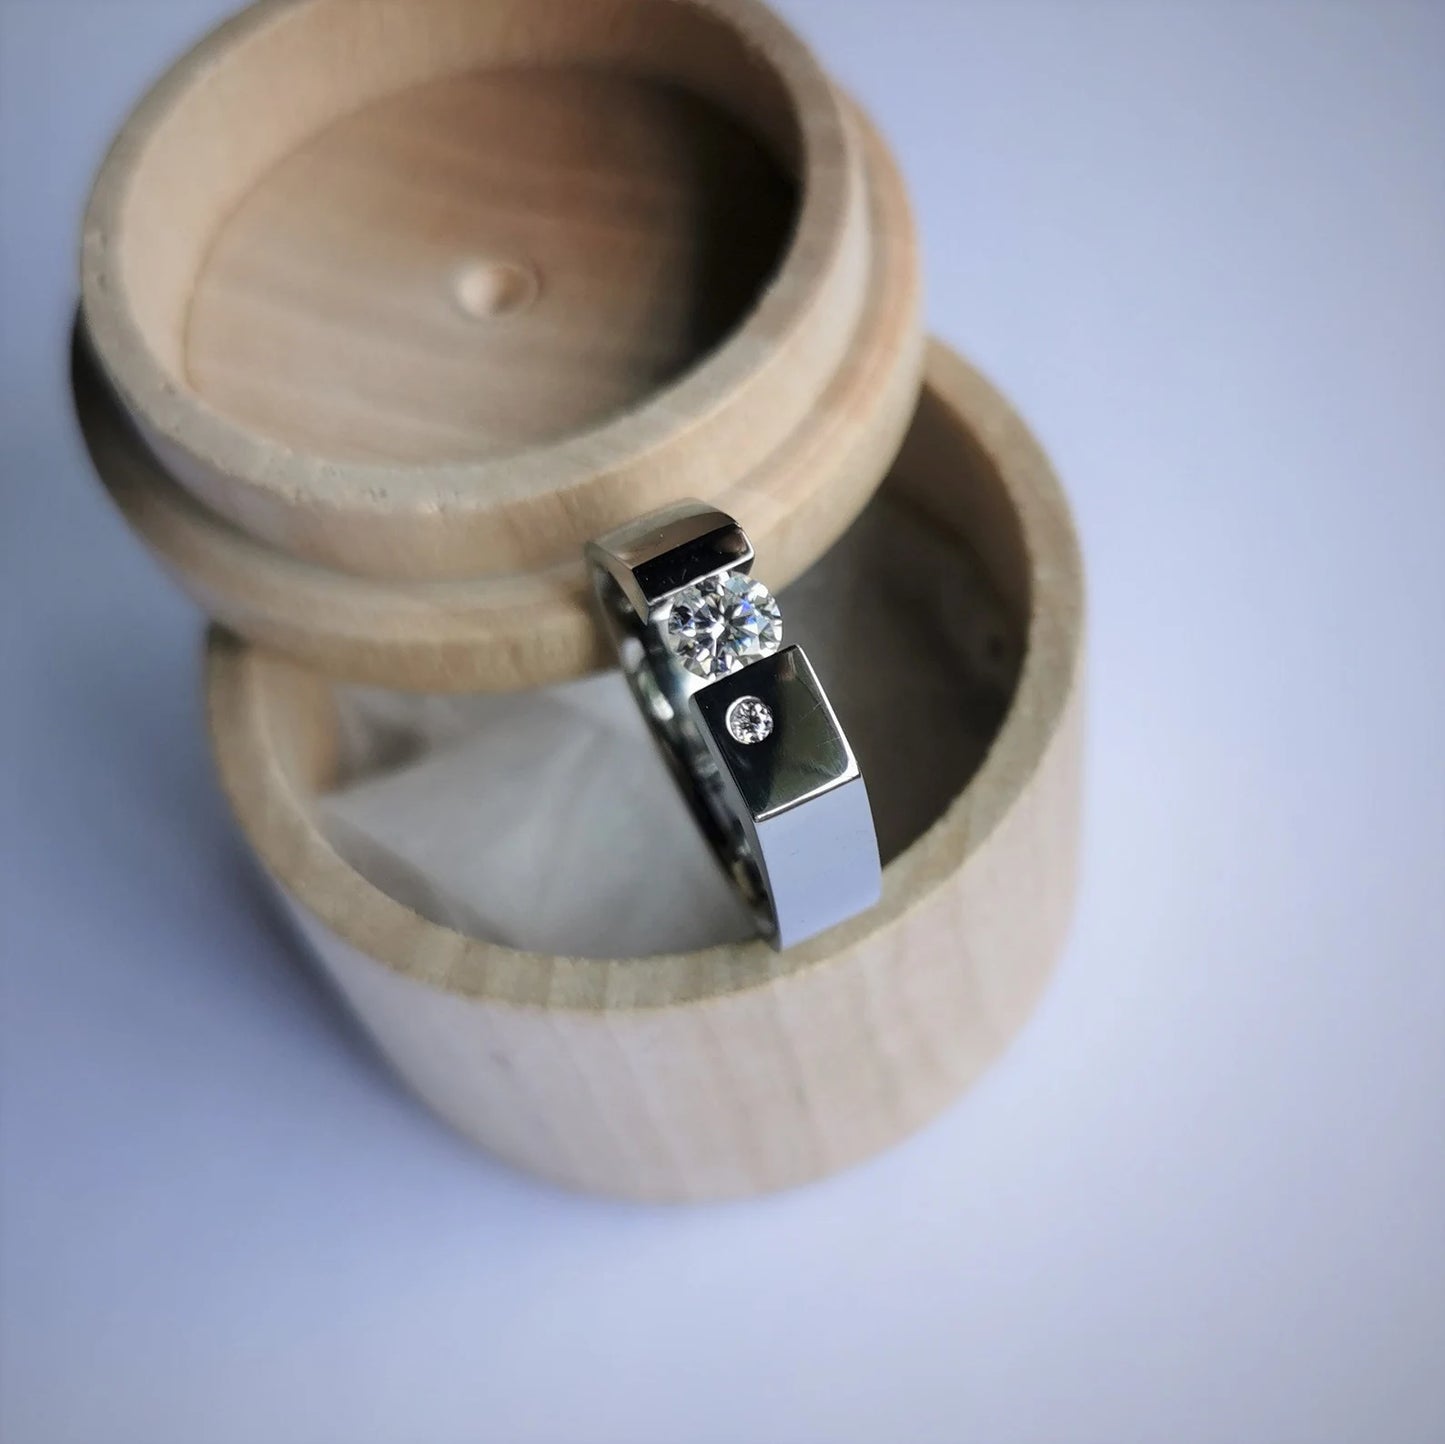 Unique Handmade Polished Titanium Tension Ring with Moissanite Round Diamond Cut Stone Setting.